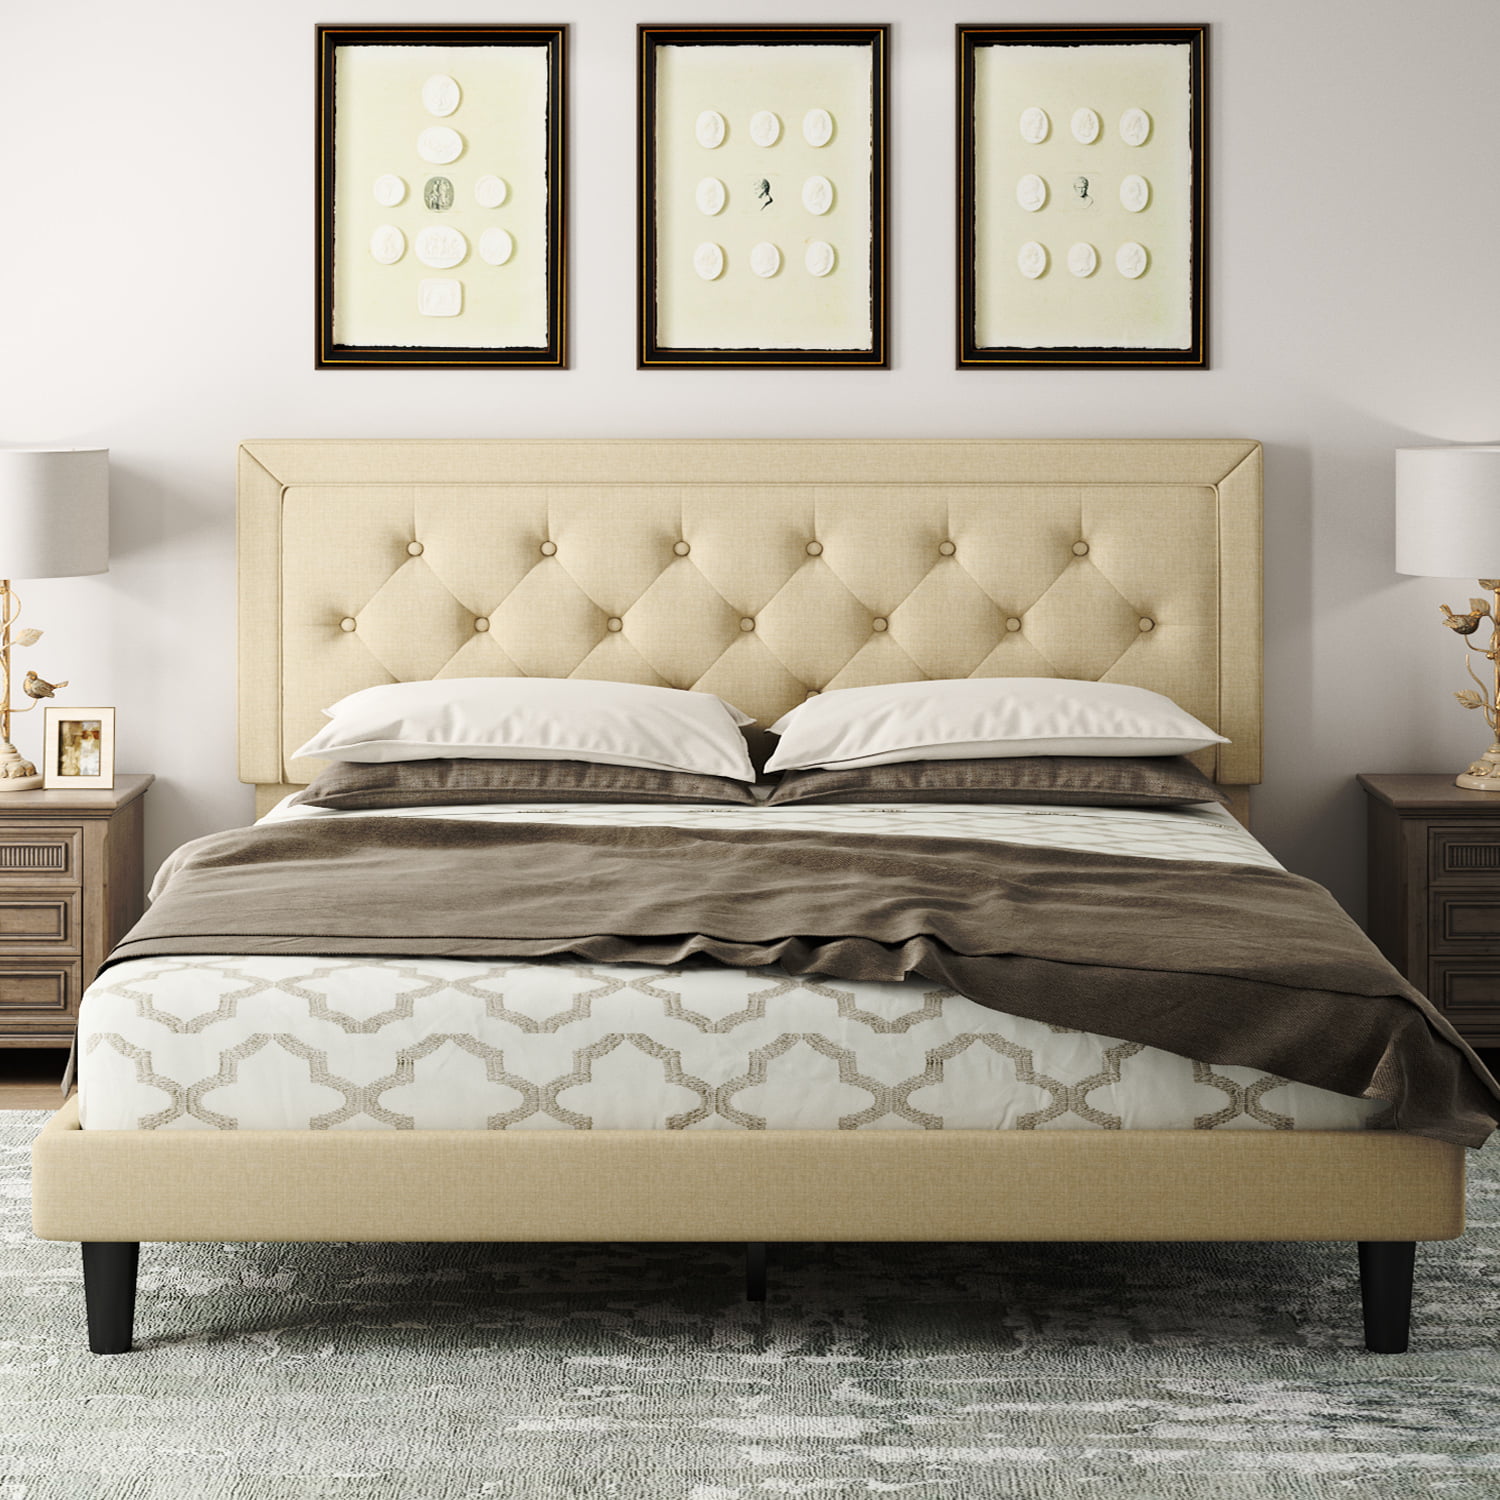 Amolife King Size Fabric Upholstered, Amolife King Size Platform Bed Frame With Headboard And 4 Storage Drawers